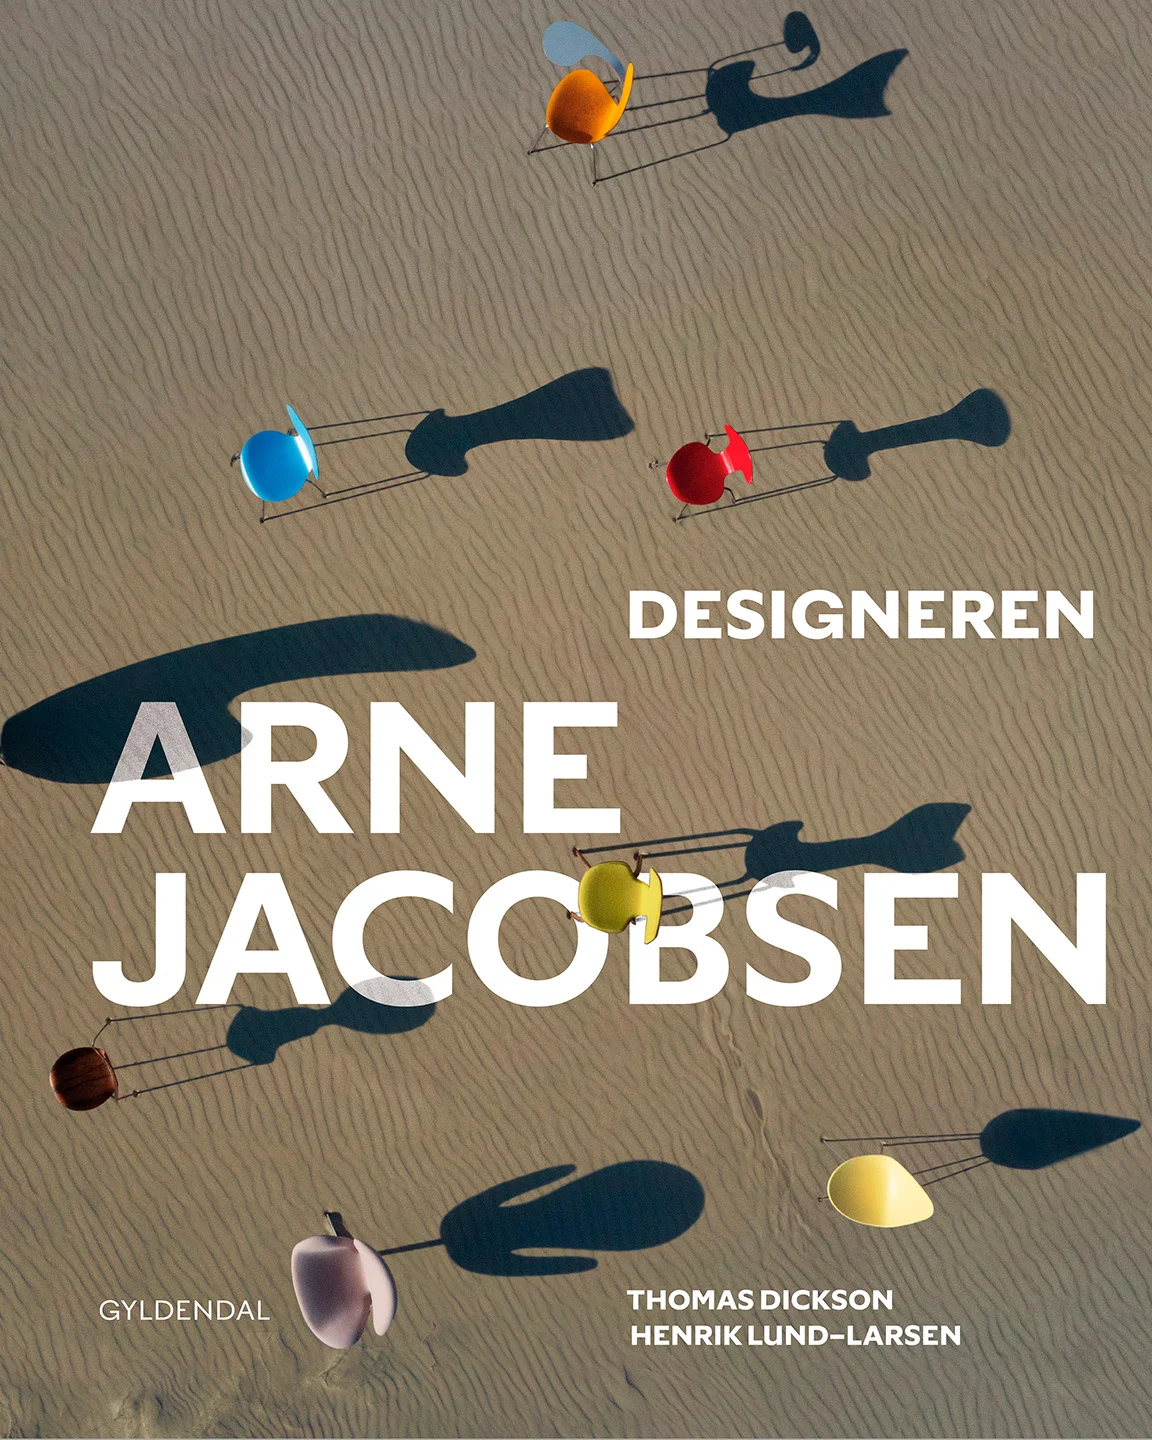 Book: The designer Arne Jacobsen